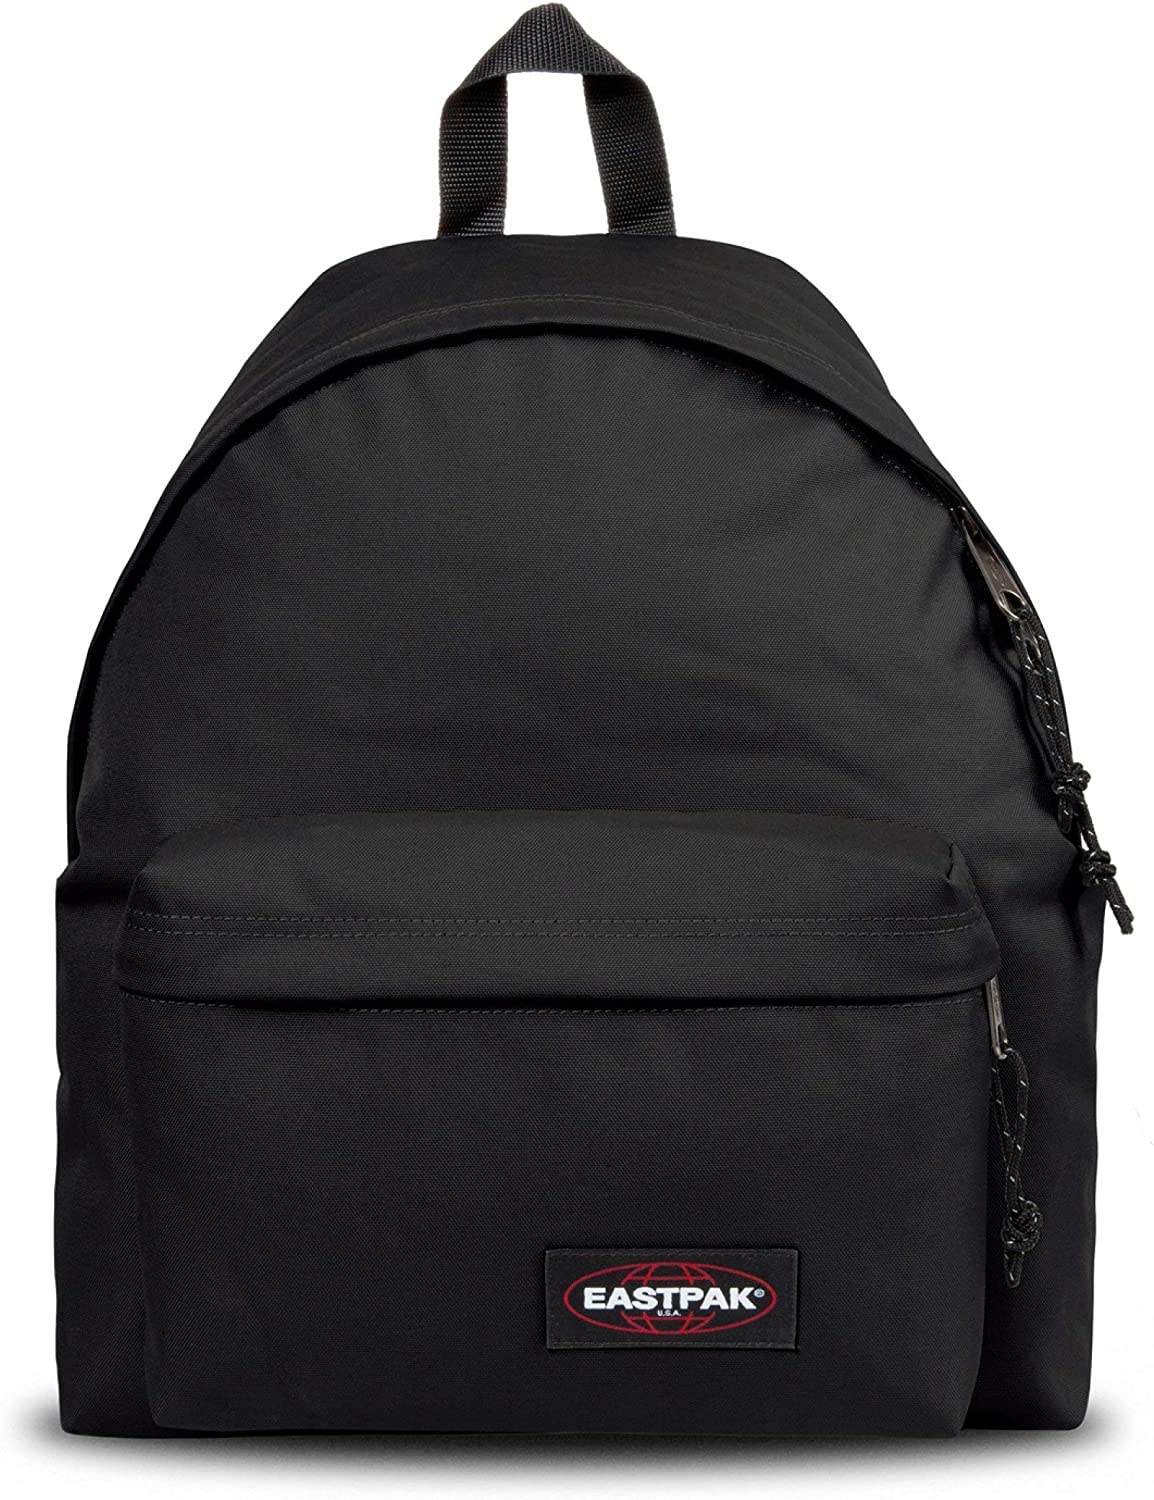 The Best Eastpak Backpack